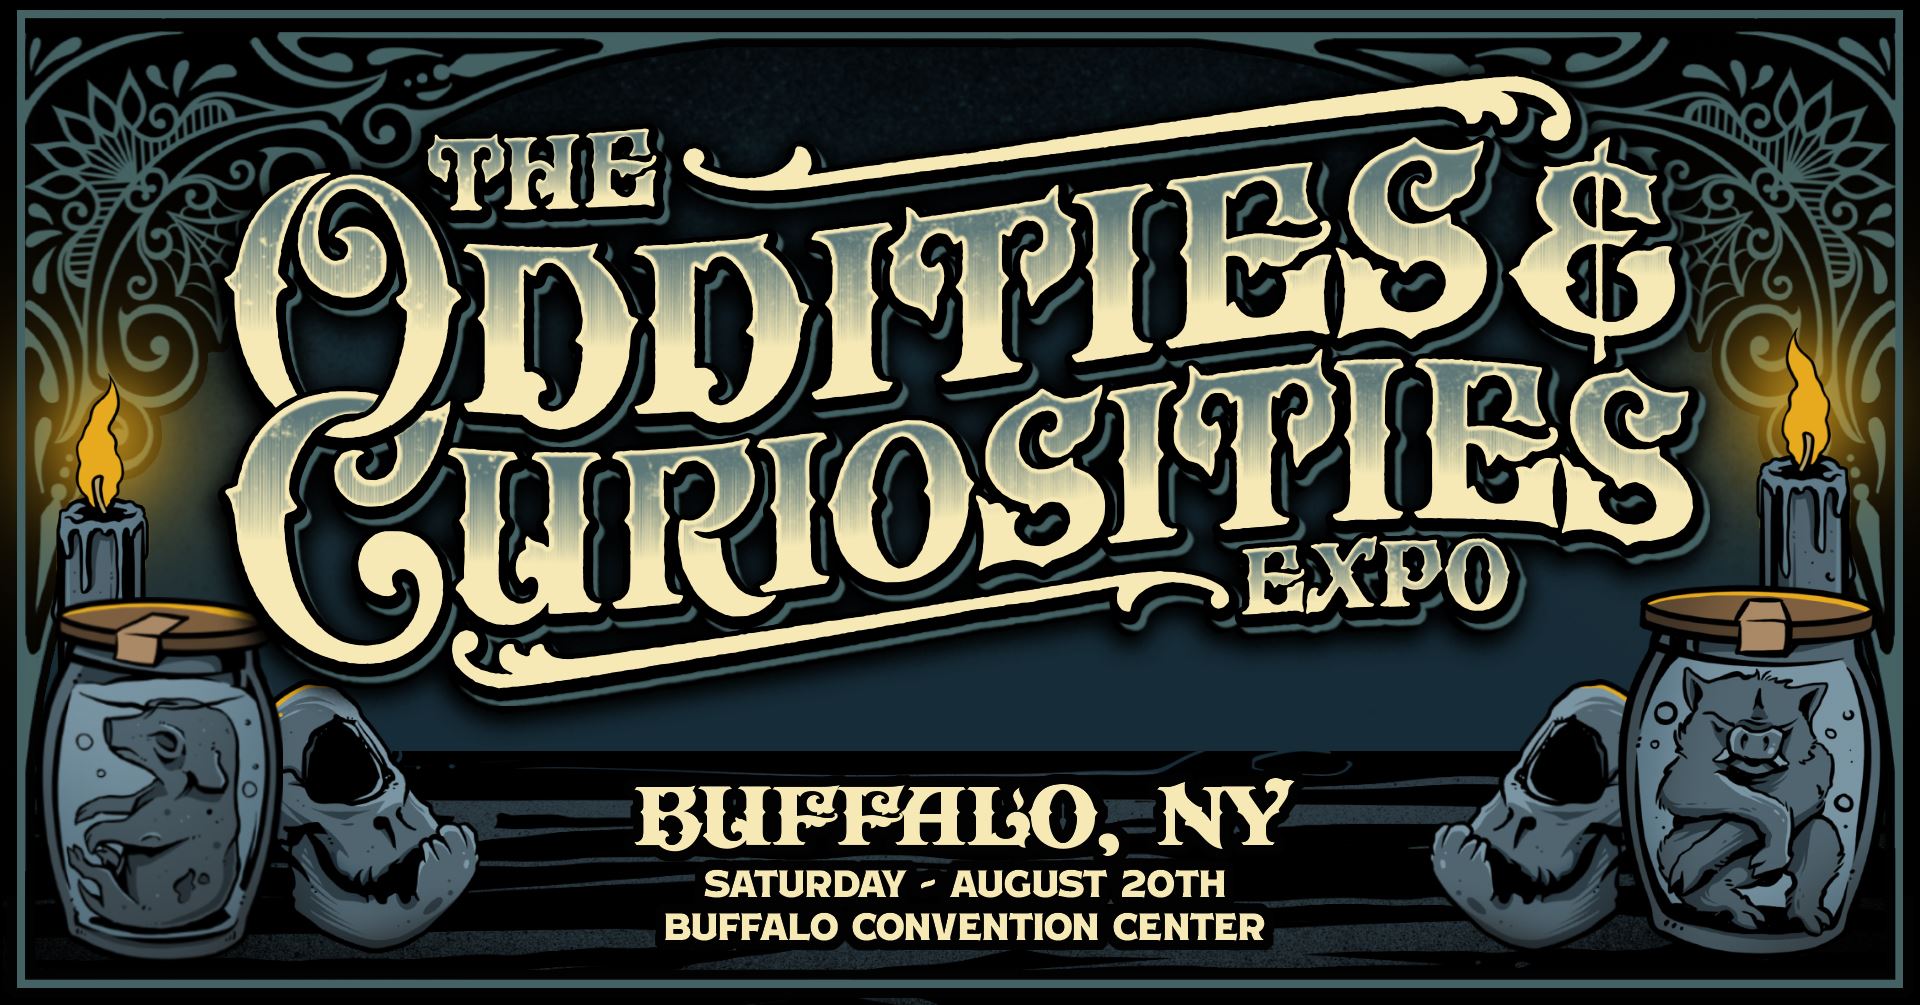 Buffalo Oddities & Curiosities Expo 2022 ElectraRelics